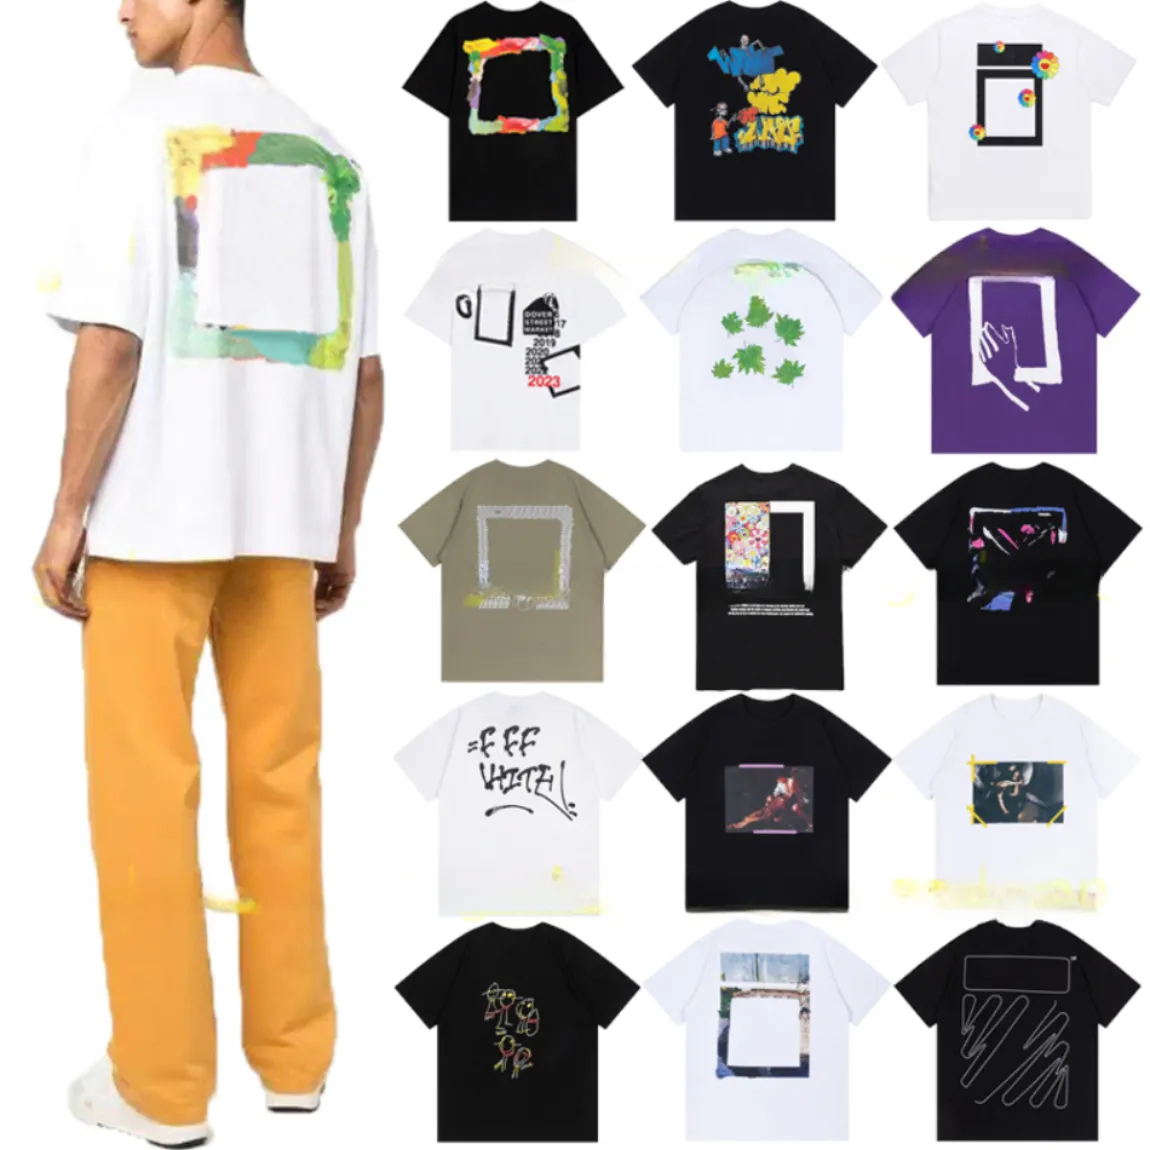 Mens T Shirs Off Brand Offs Colors White New Street Fashion Brand Casal Star com Camiseta de Manga Curta Carta impressa x The Back Print Hip Hop Style Loose